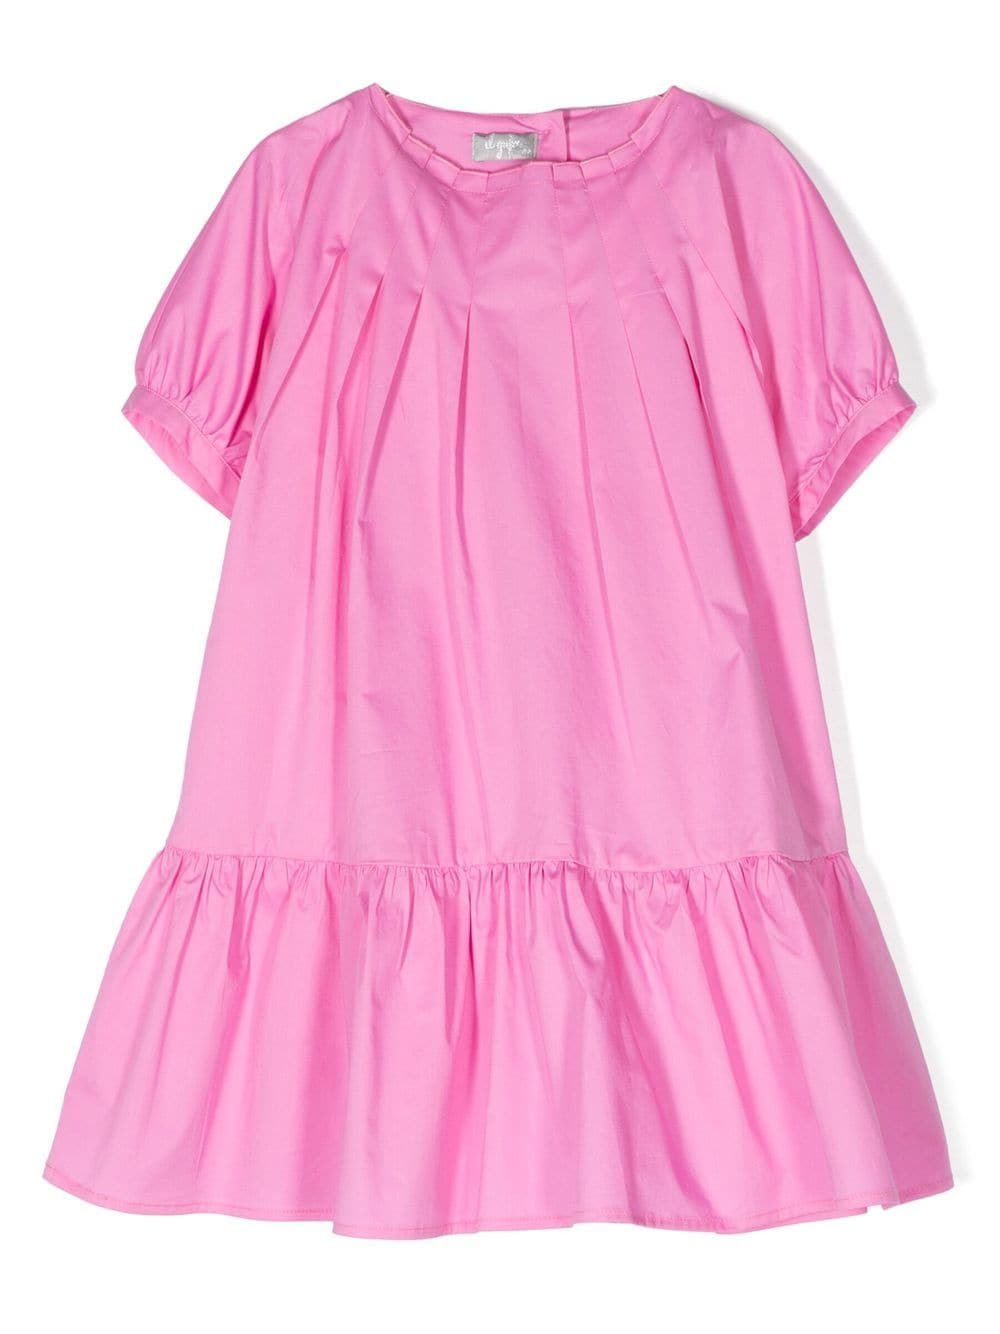 Pink dress for little girls